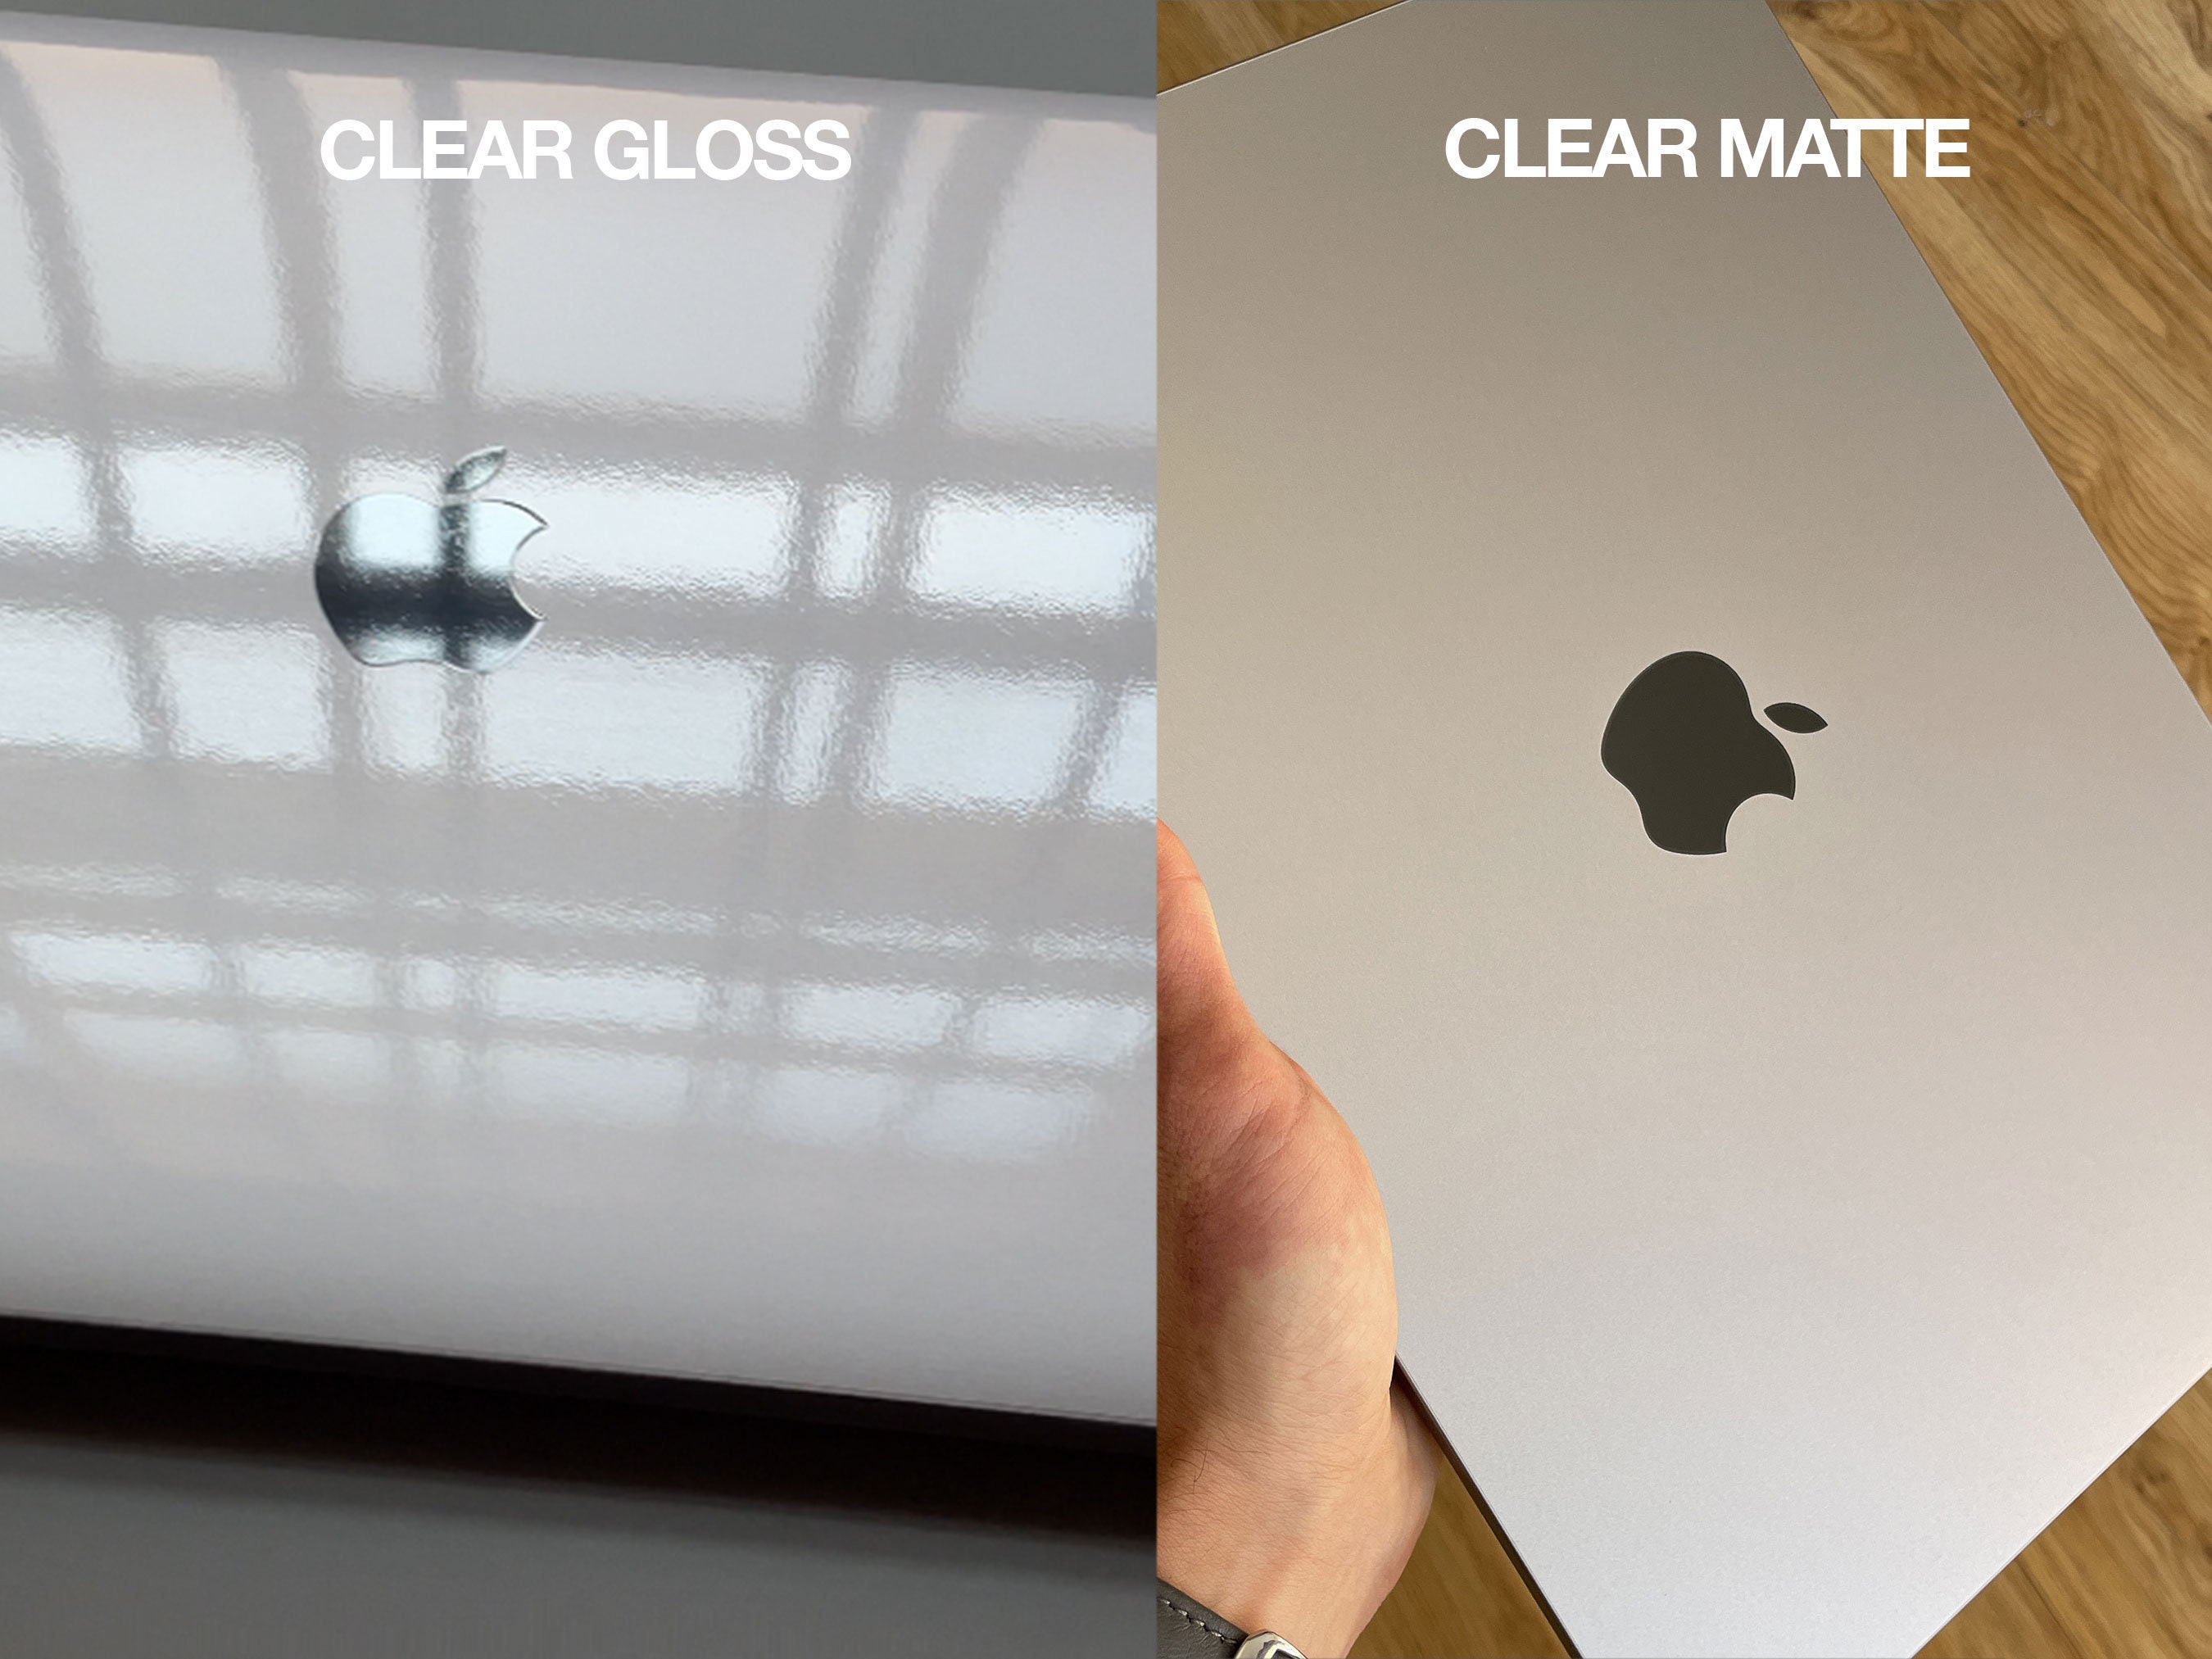 Apple iPhone 13 Pro Max Full-Body Clear Skin Film + Screen Protector -  WrapBros UK